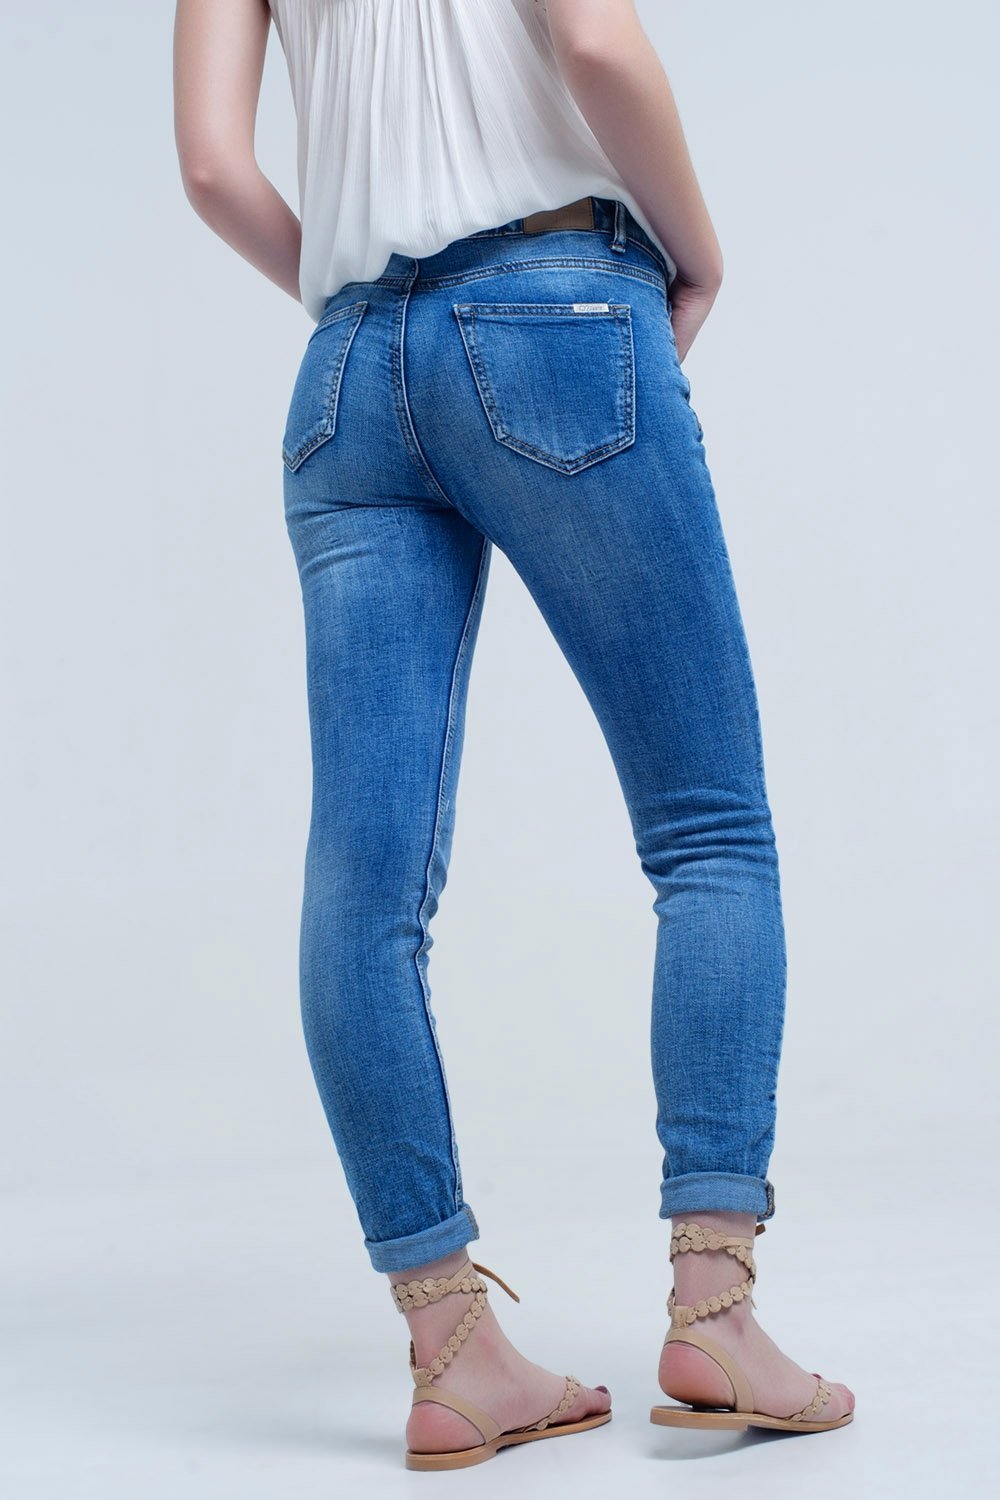 Women's Basic Jeans Pants with Functional Pockets - Women - Apparel - Pants - Jeans - Benn~Burry